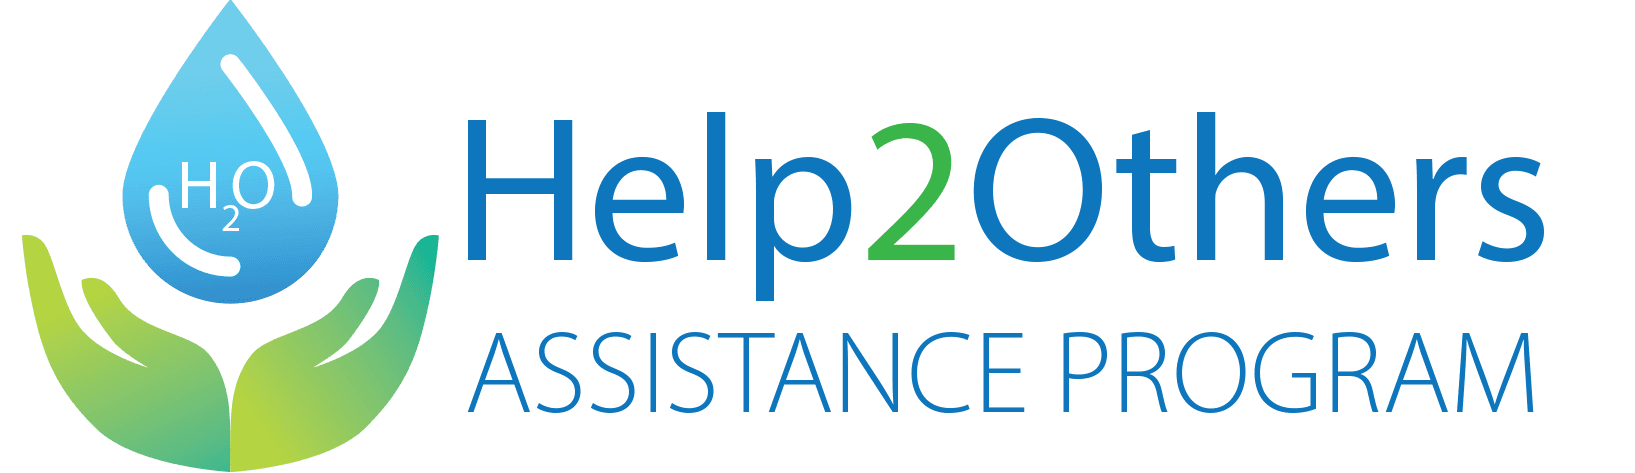 Help2Others Customer Assistance Program Logo